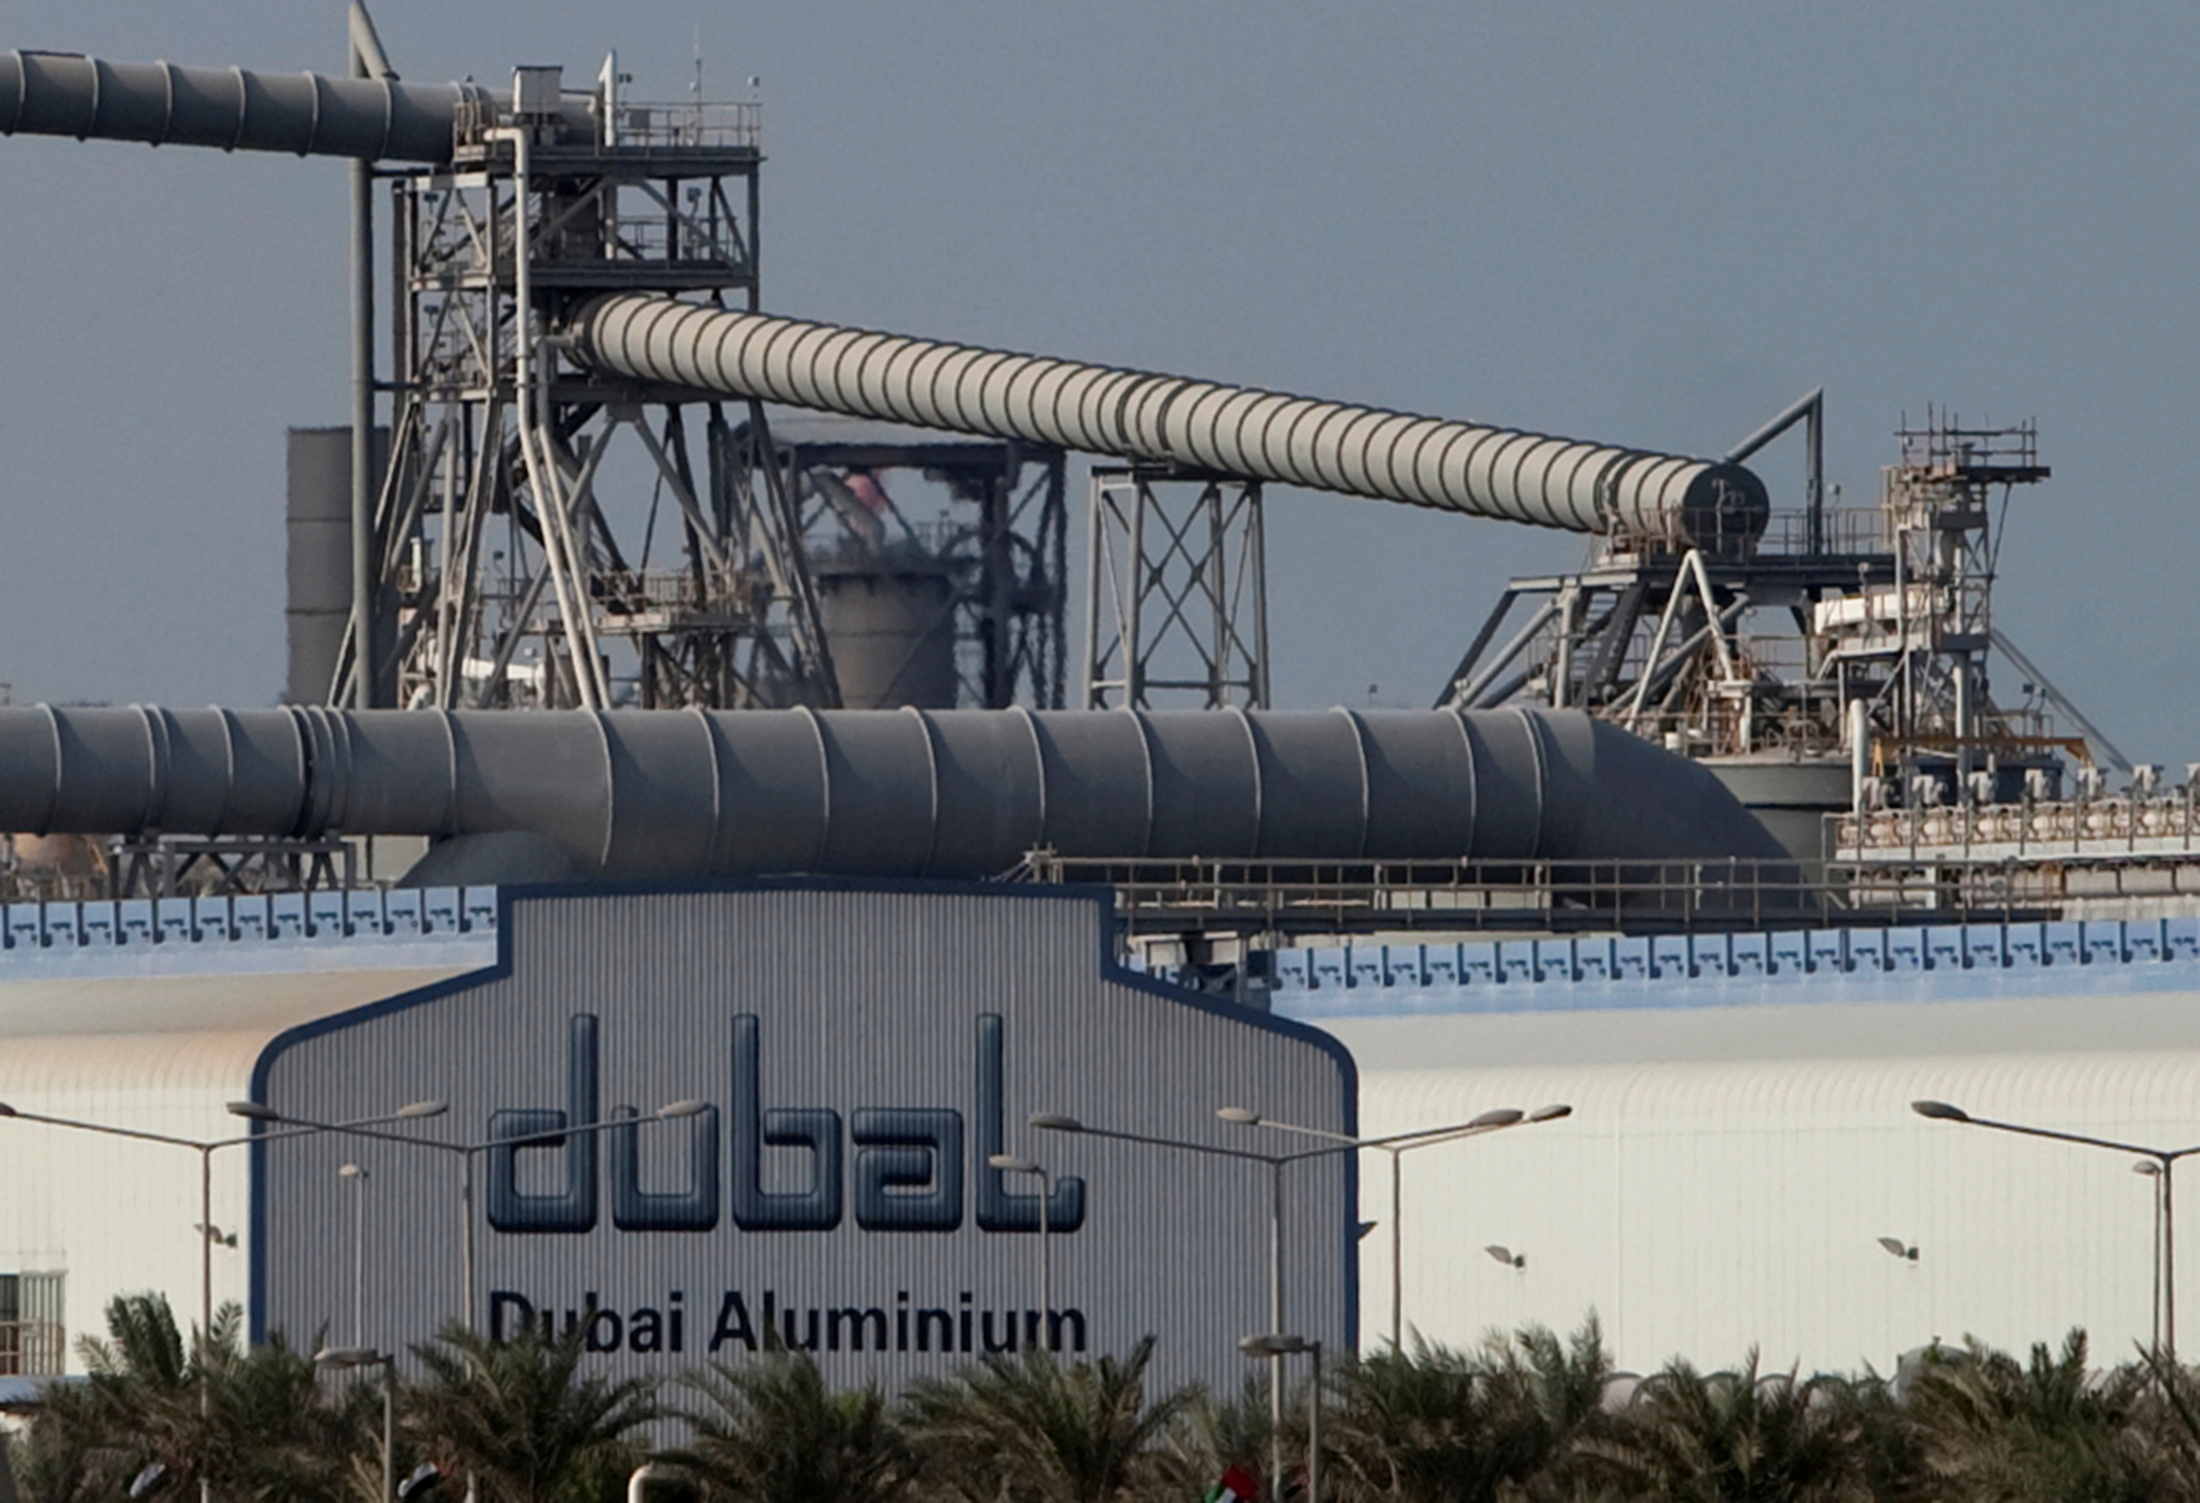 Dubai Aluminium logo is seen in the Jebel Ali area of Dubai